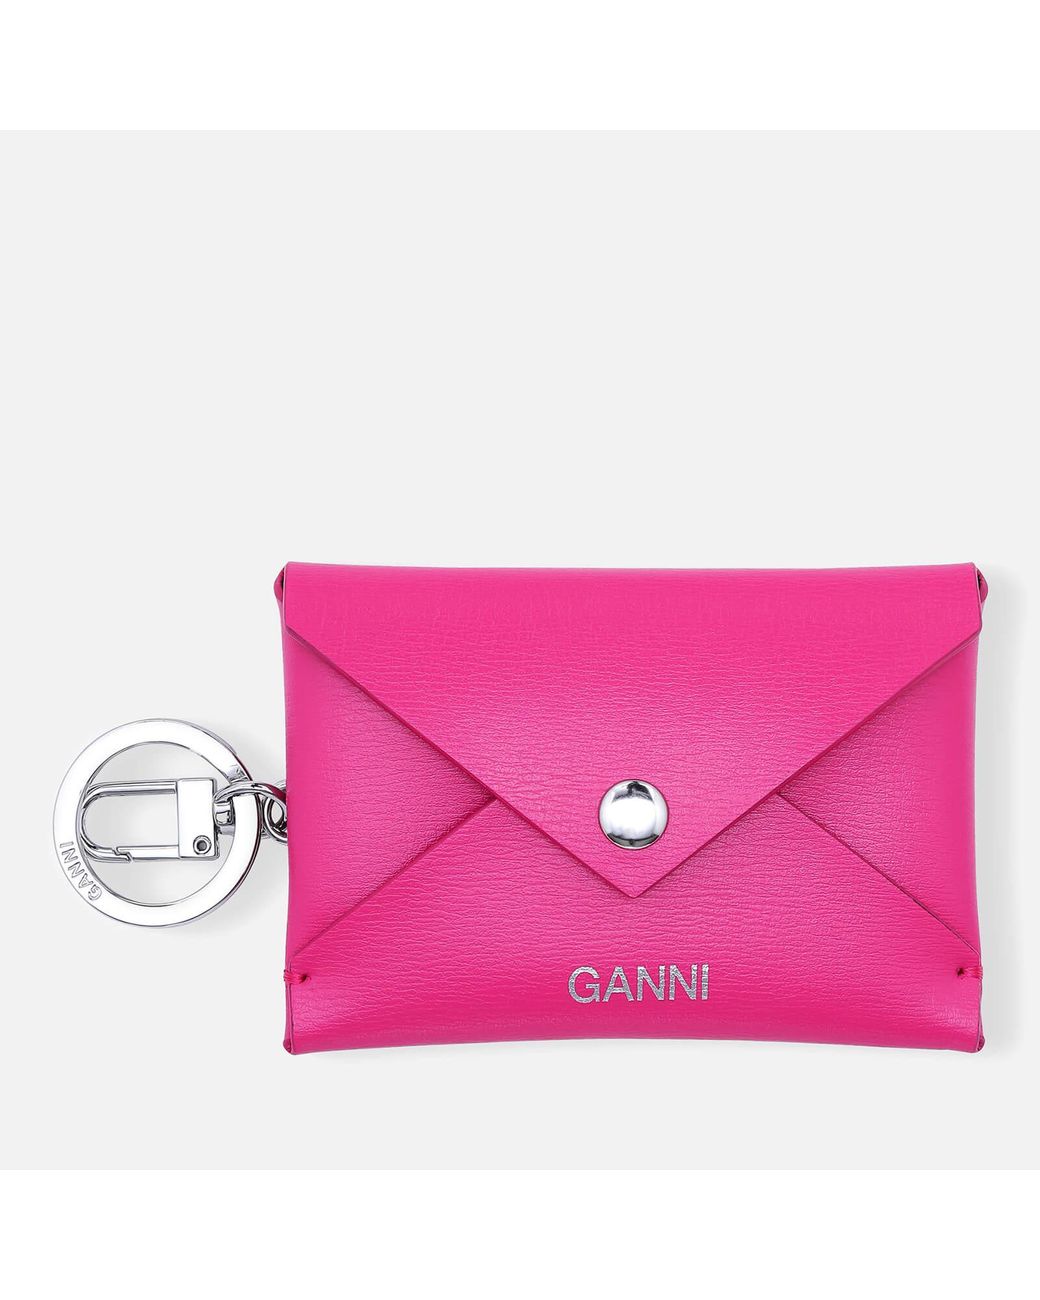 Ganni Leather Key Chain/envelope Cardholder in Pink | Lyst